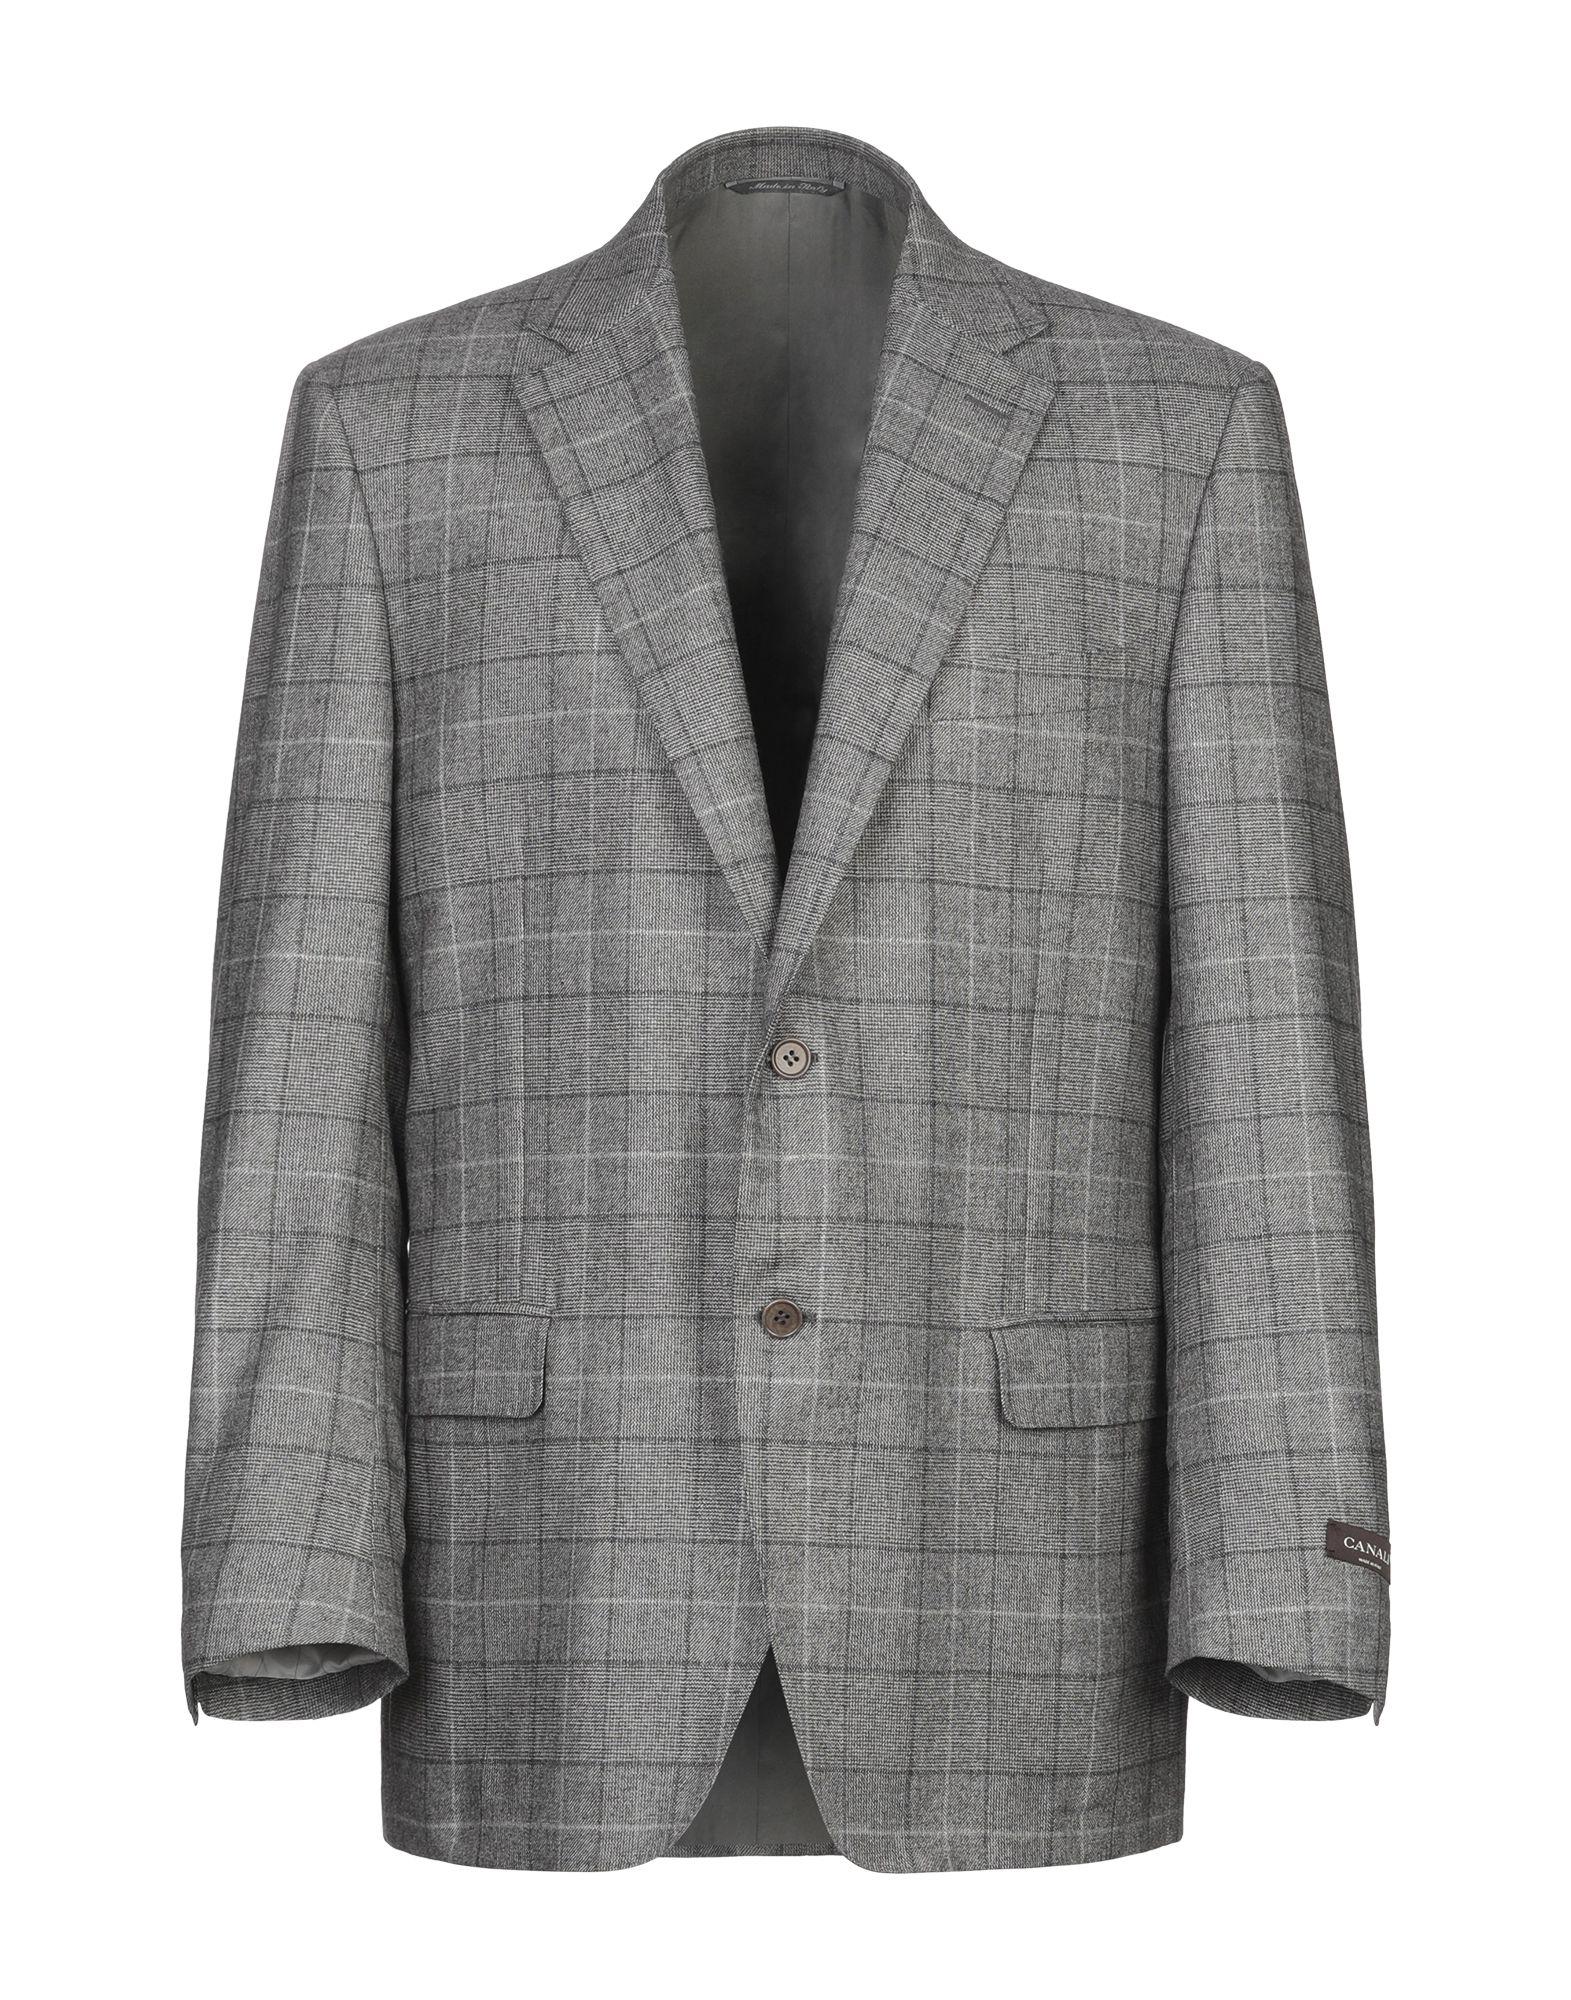 Canali Flannel Blazer in Grey (Gray) for Men - Lyst